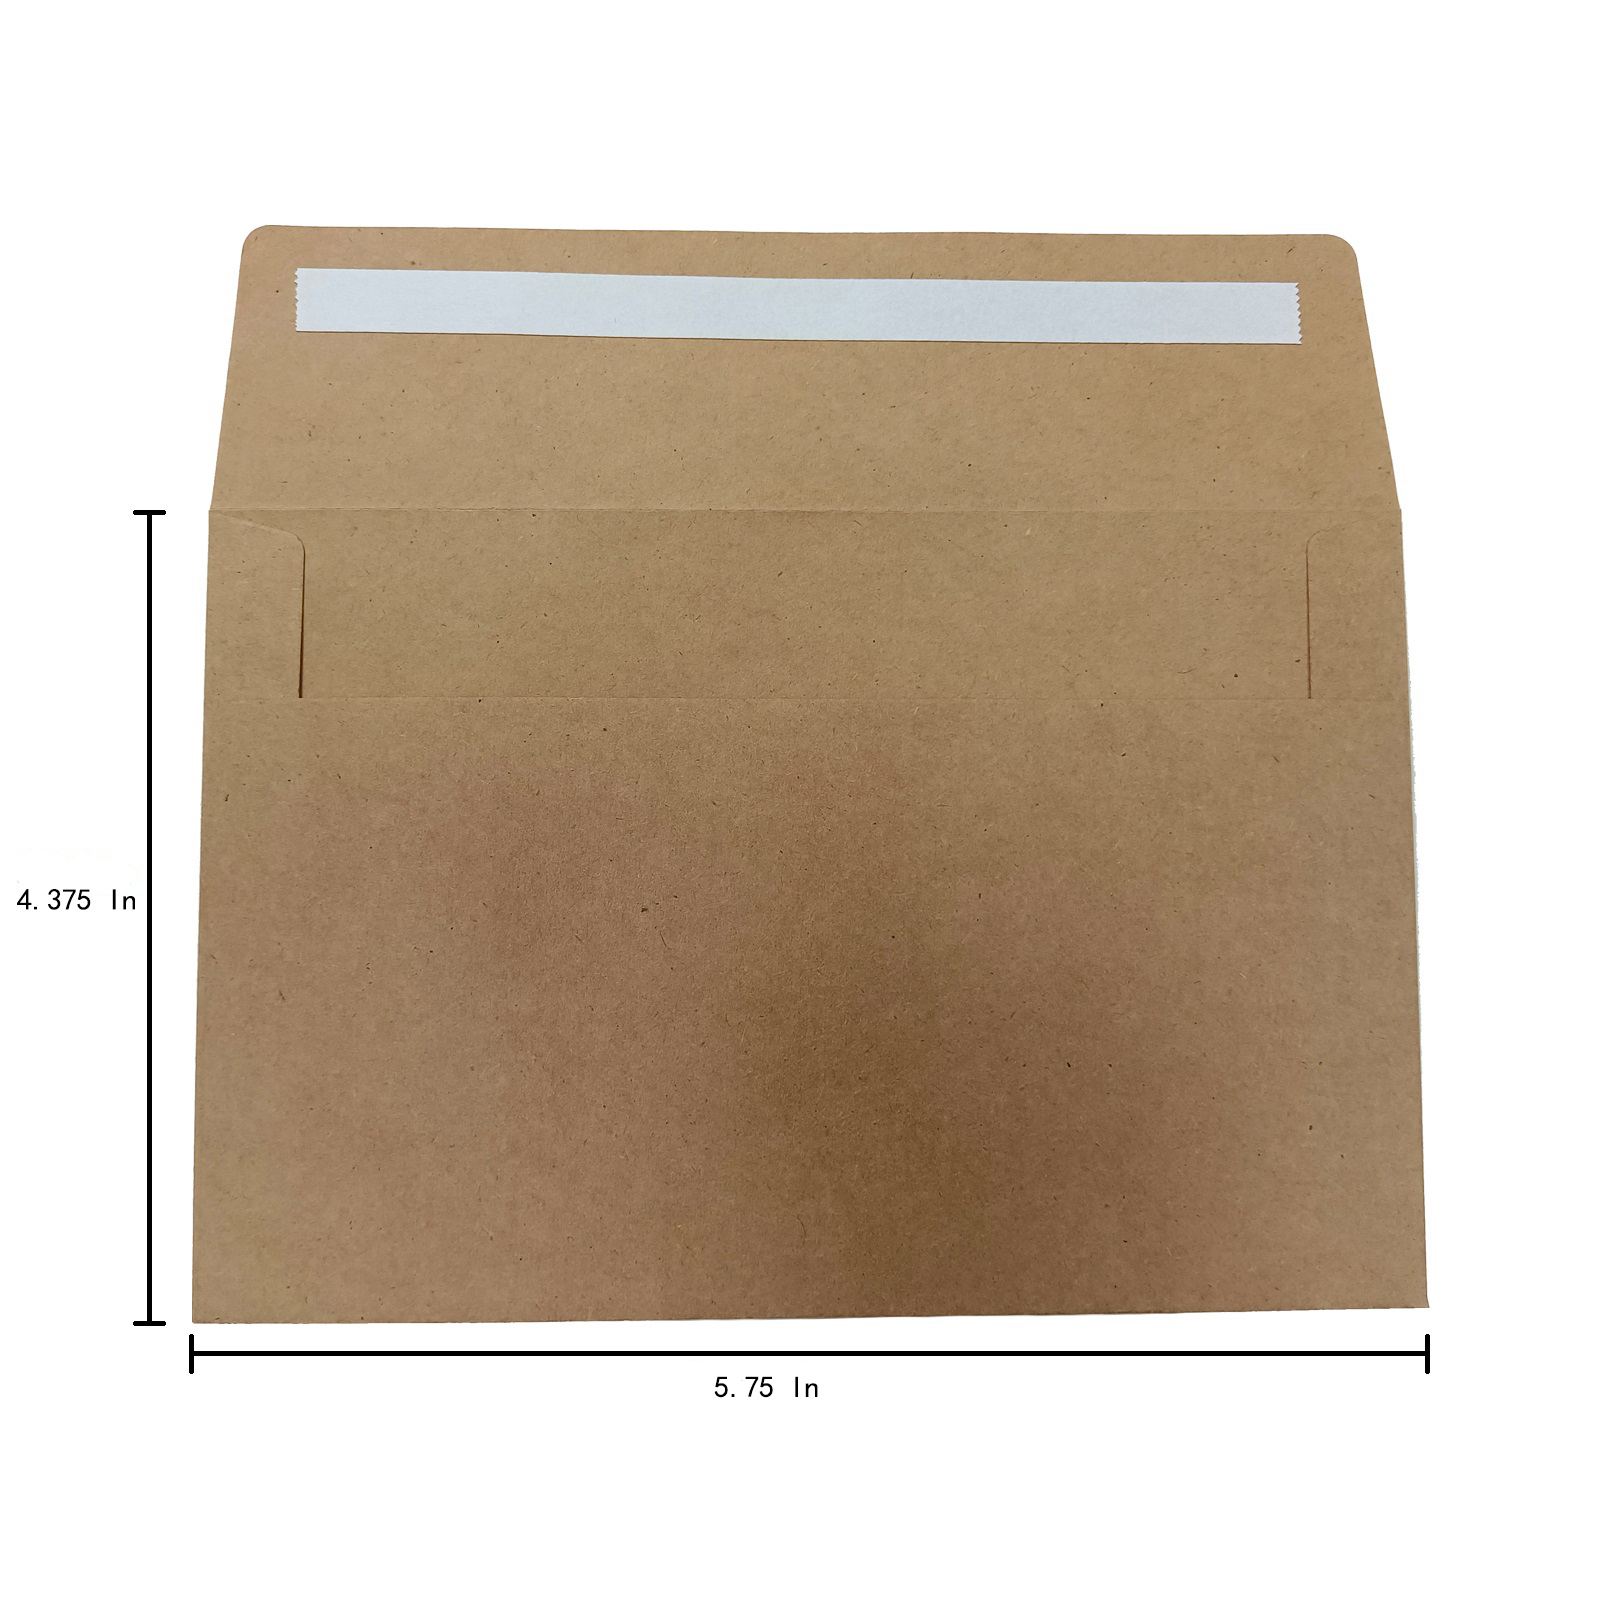 RSVP Envelopes Luxury 150gsm for Greeting Card Envelopes and Invitation Envelopes 4-3/8 x 5-3/4 Brown Envelopes Self Seal 100 with Box Sweetzer & Orange A2 Envelopes Plain Kraft Envelopes.